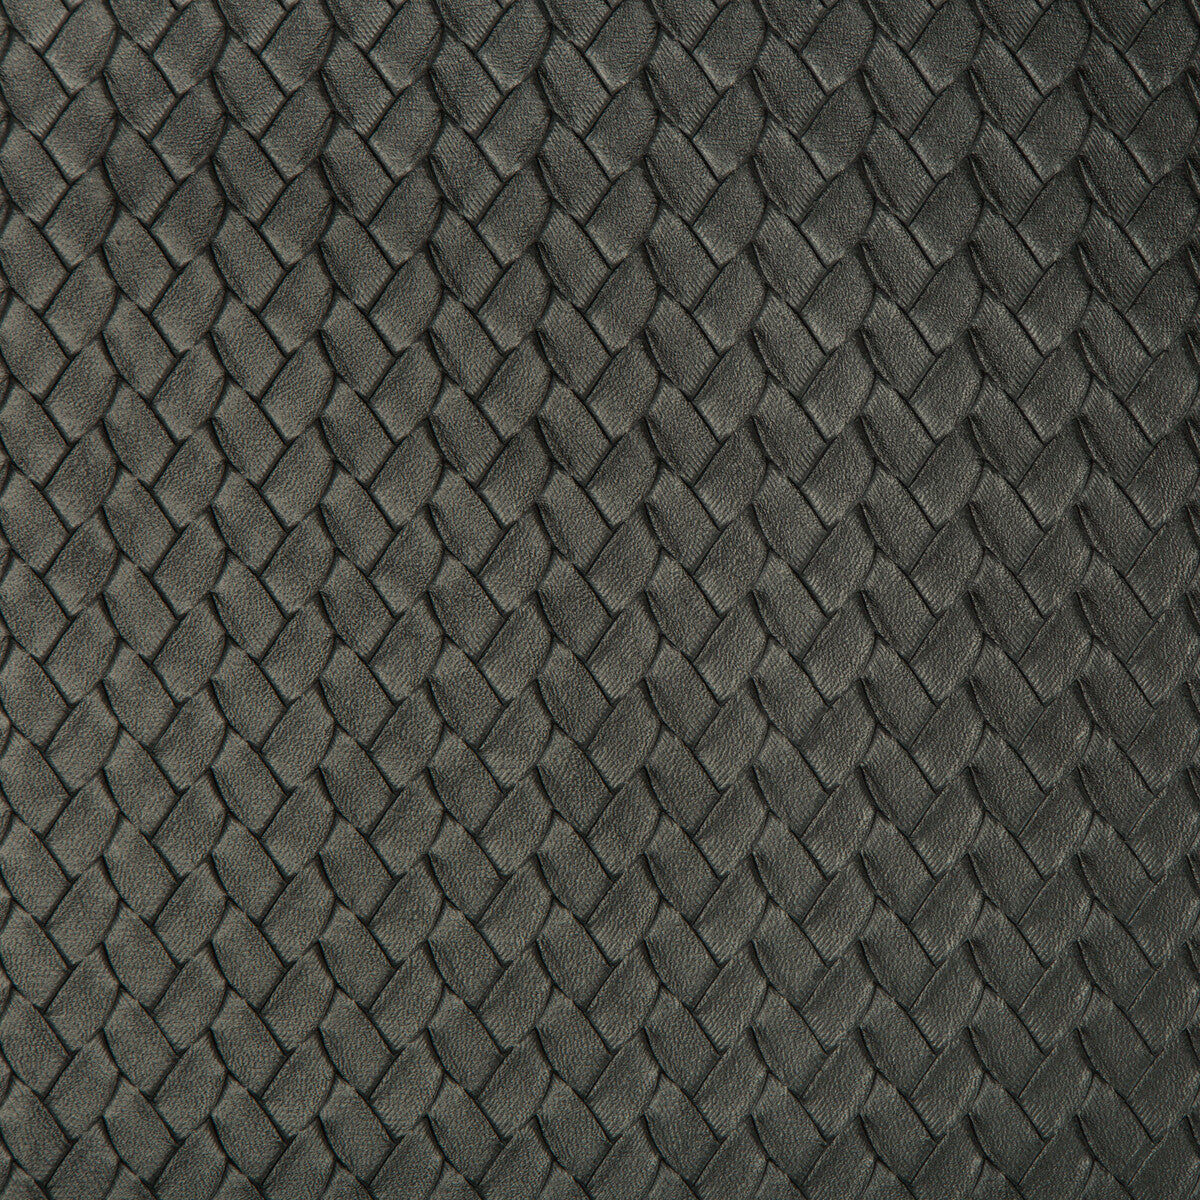 Kravet Design fabric in verlaine-8 color - pattern VERLAINE.8.0 - by Kravet Design